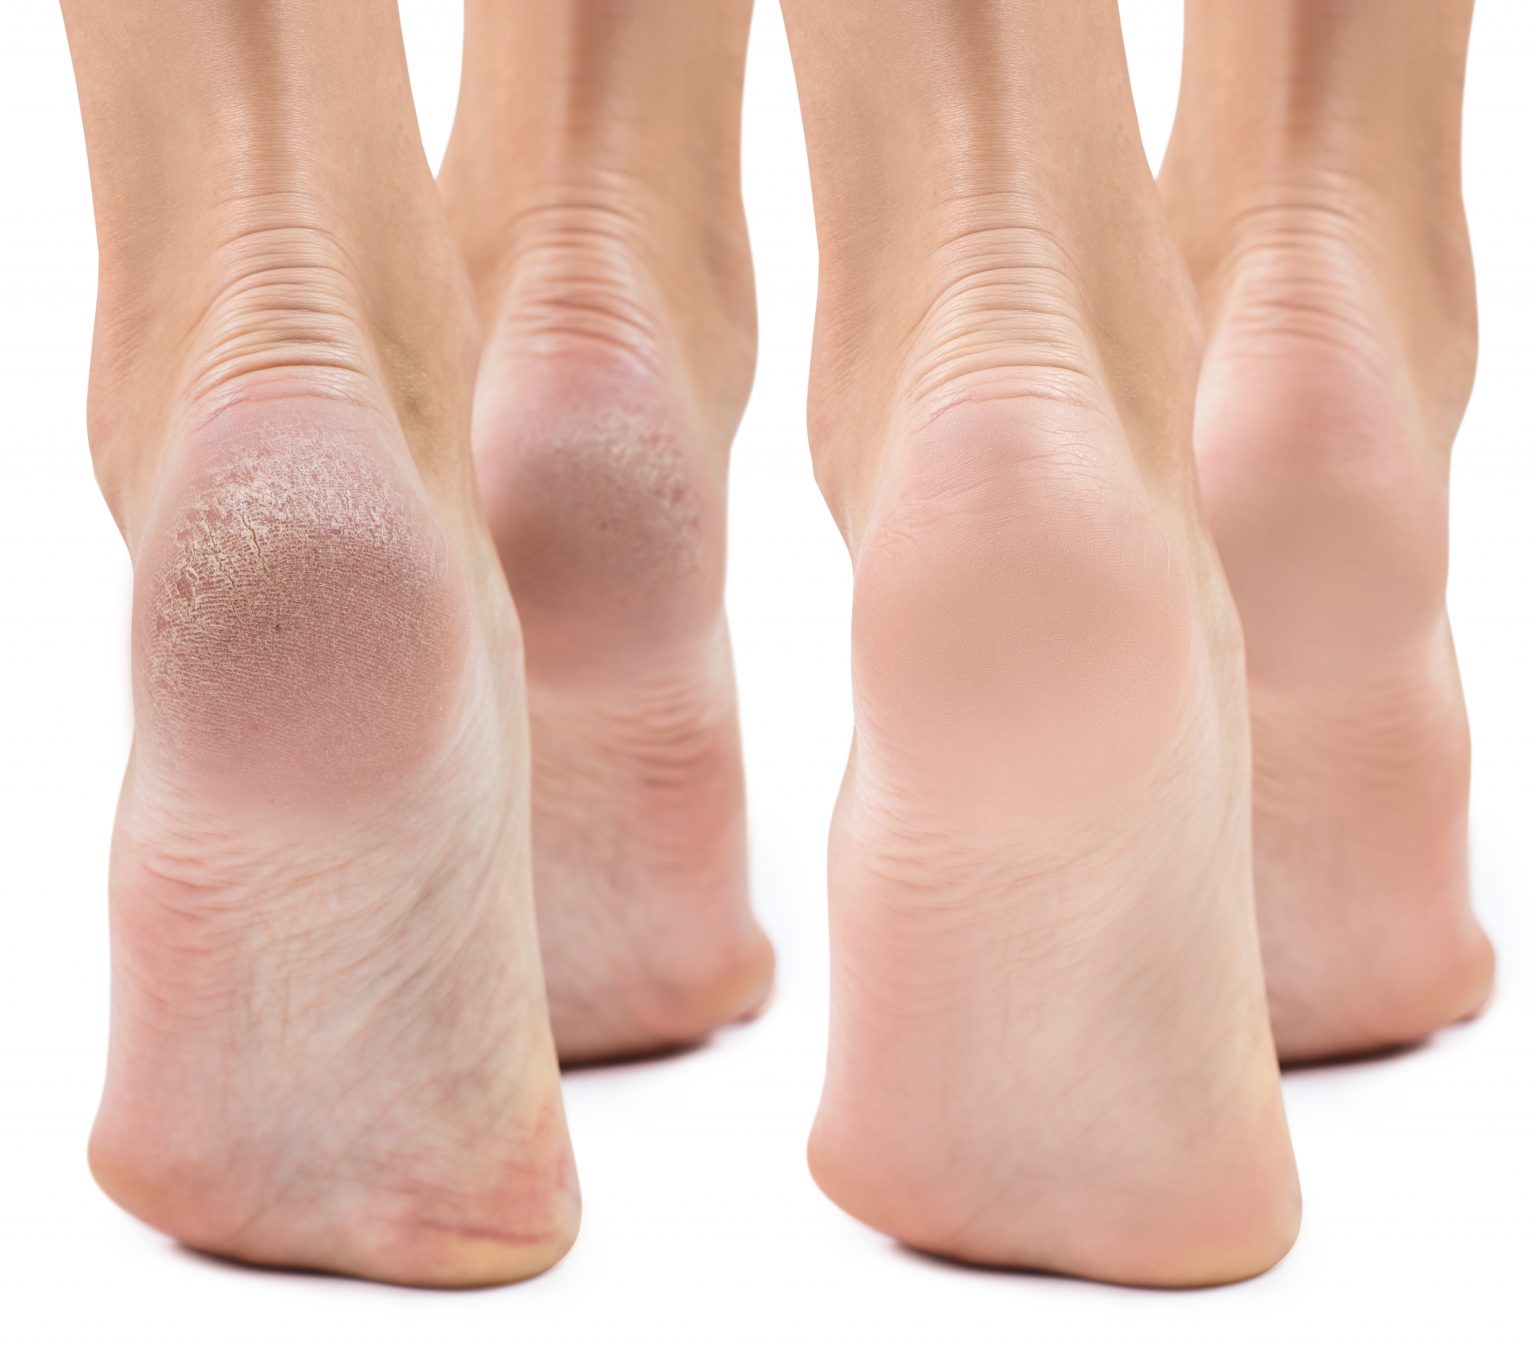 Dry Feet Cracked Heels Causes Treatment 1536x1360 